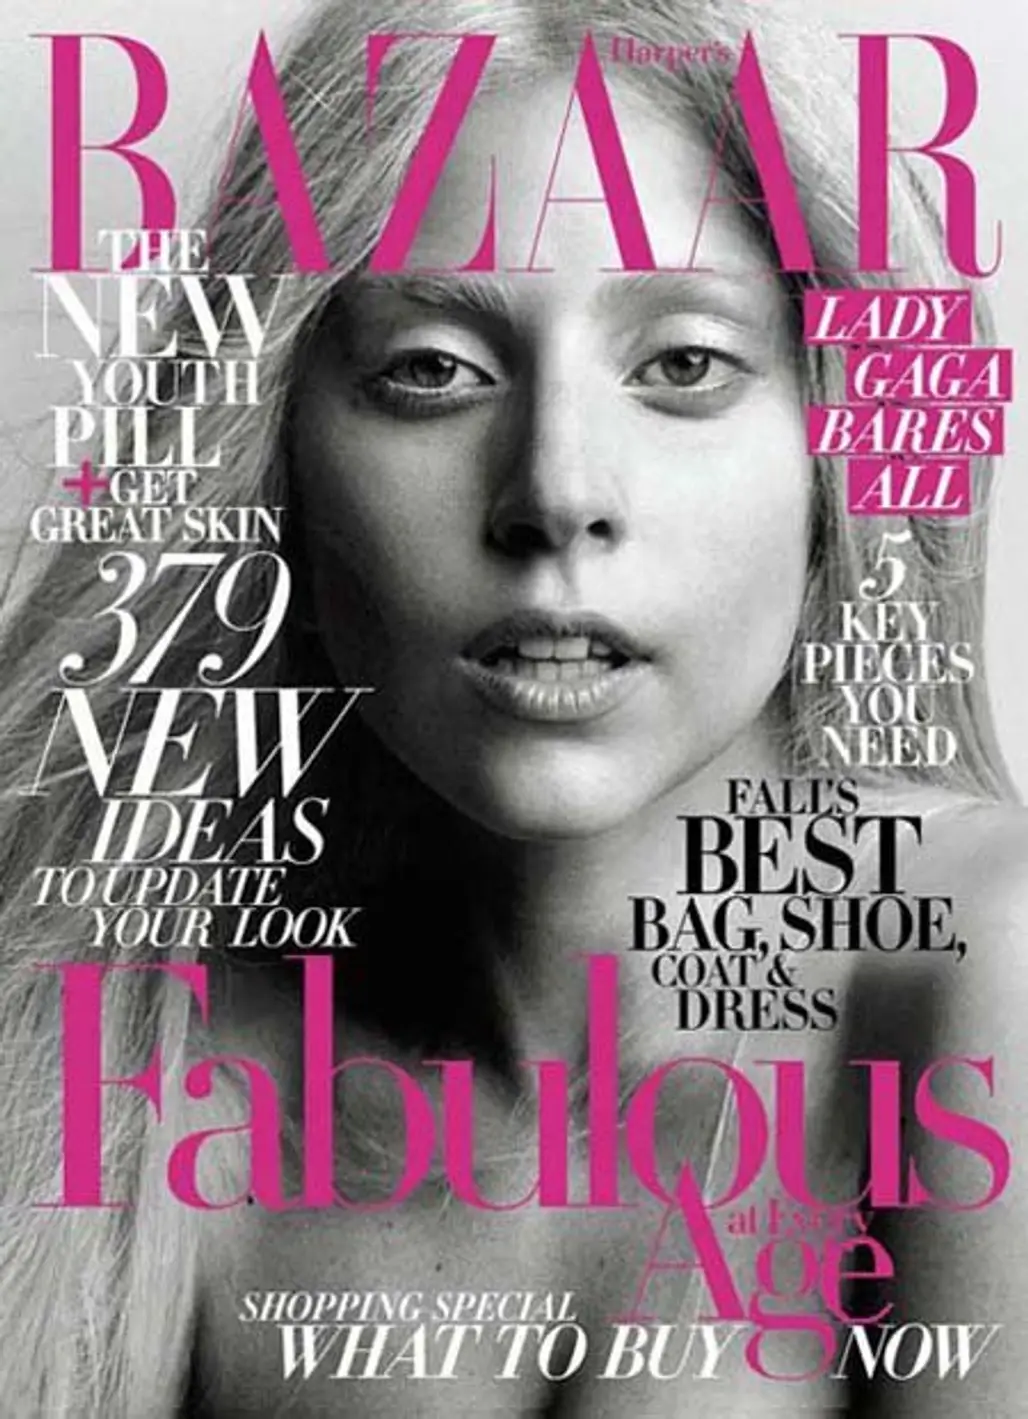 Lady Gaga for Harper's Bazaar